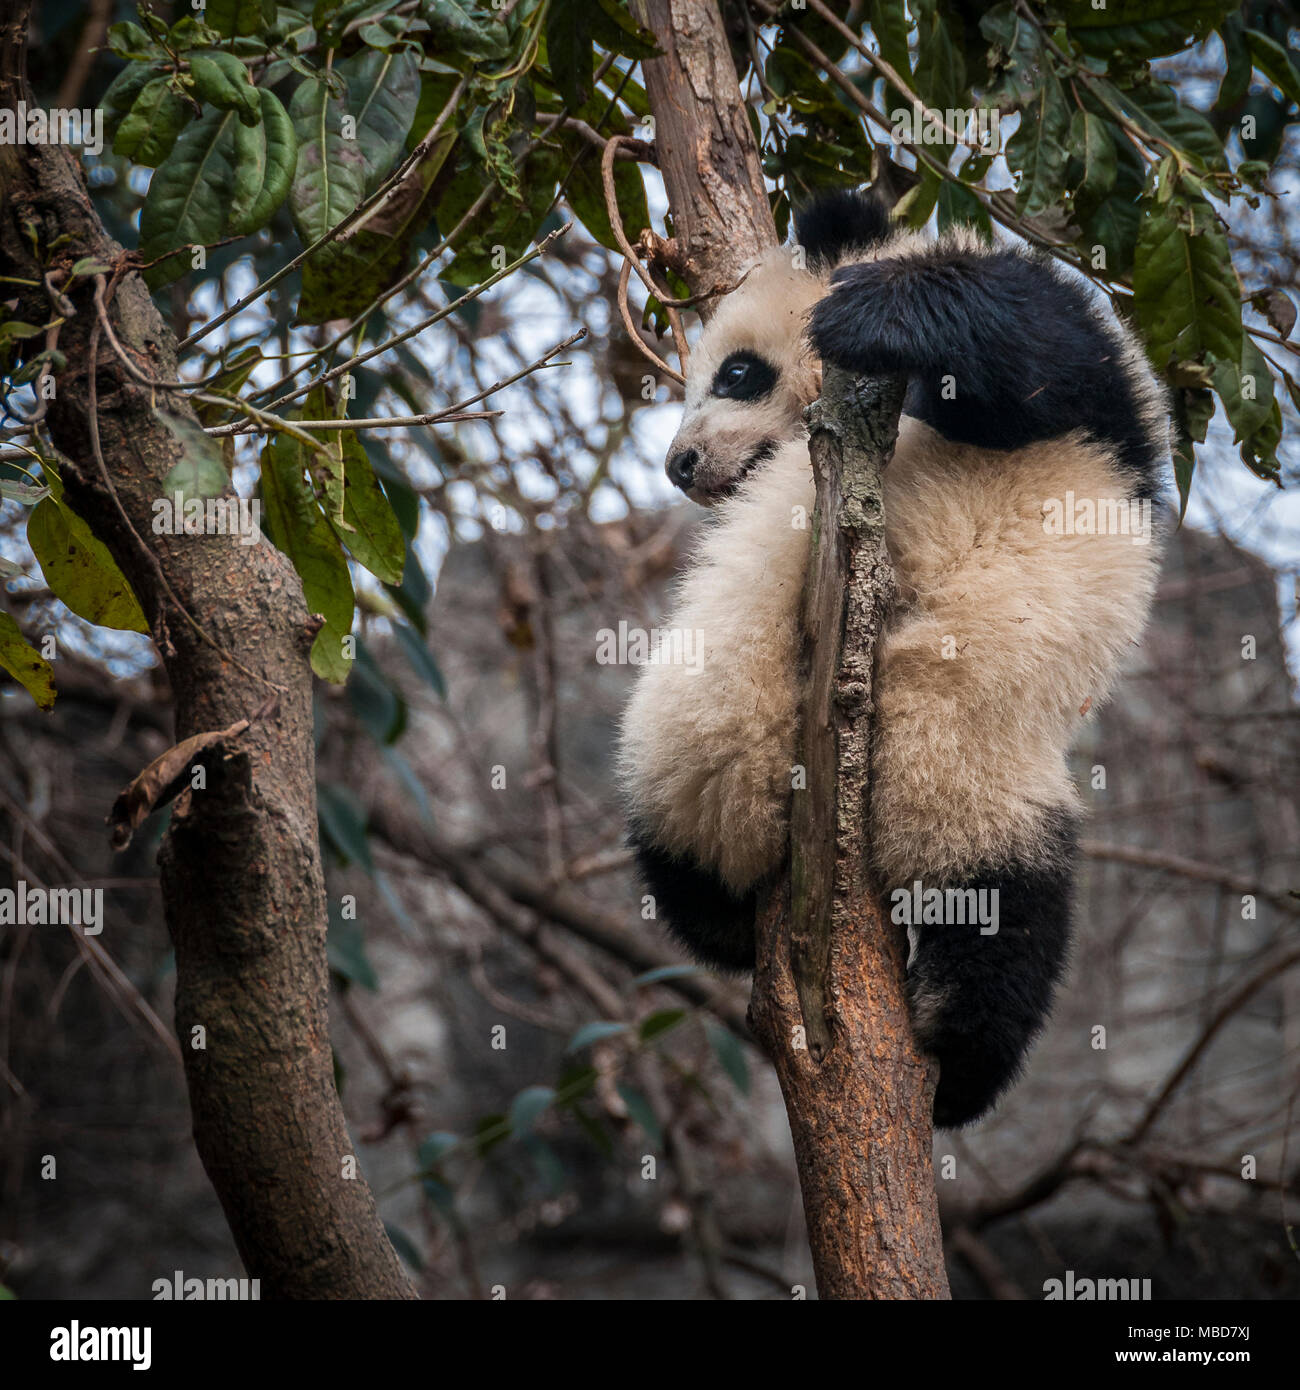 Un panda gigante in un involucro a Chengdu Research Base del Panda Gigante di allevamento in Cina Foto Stock